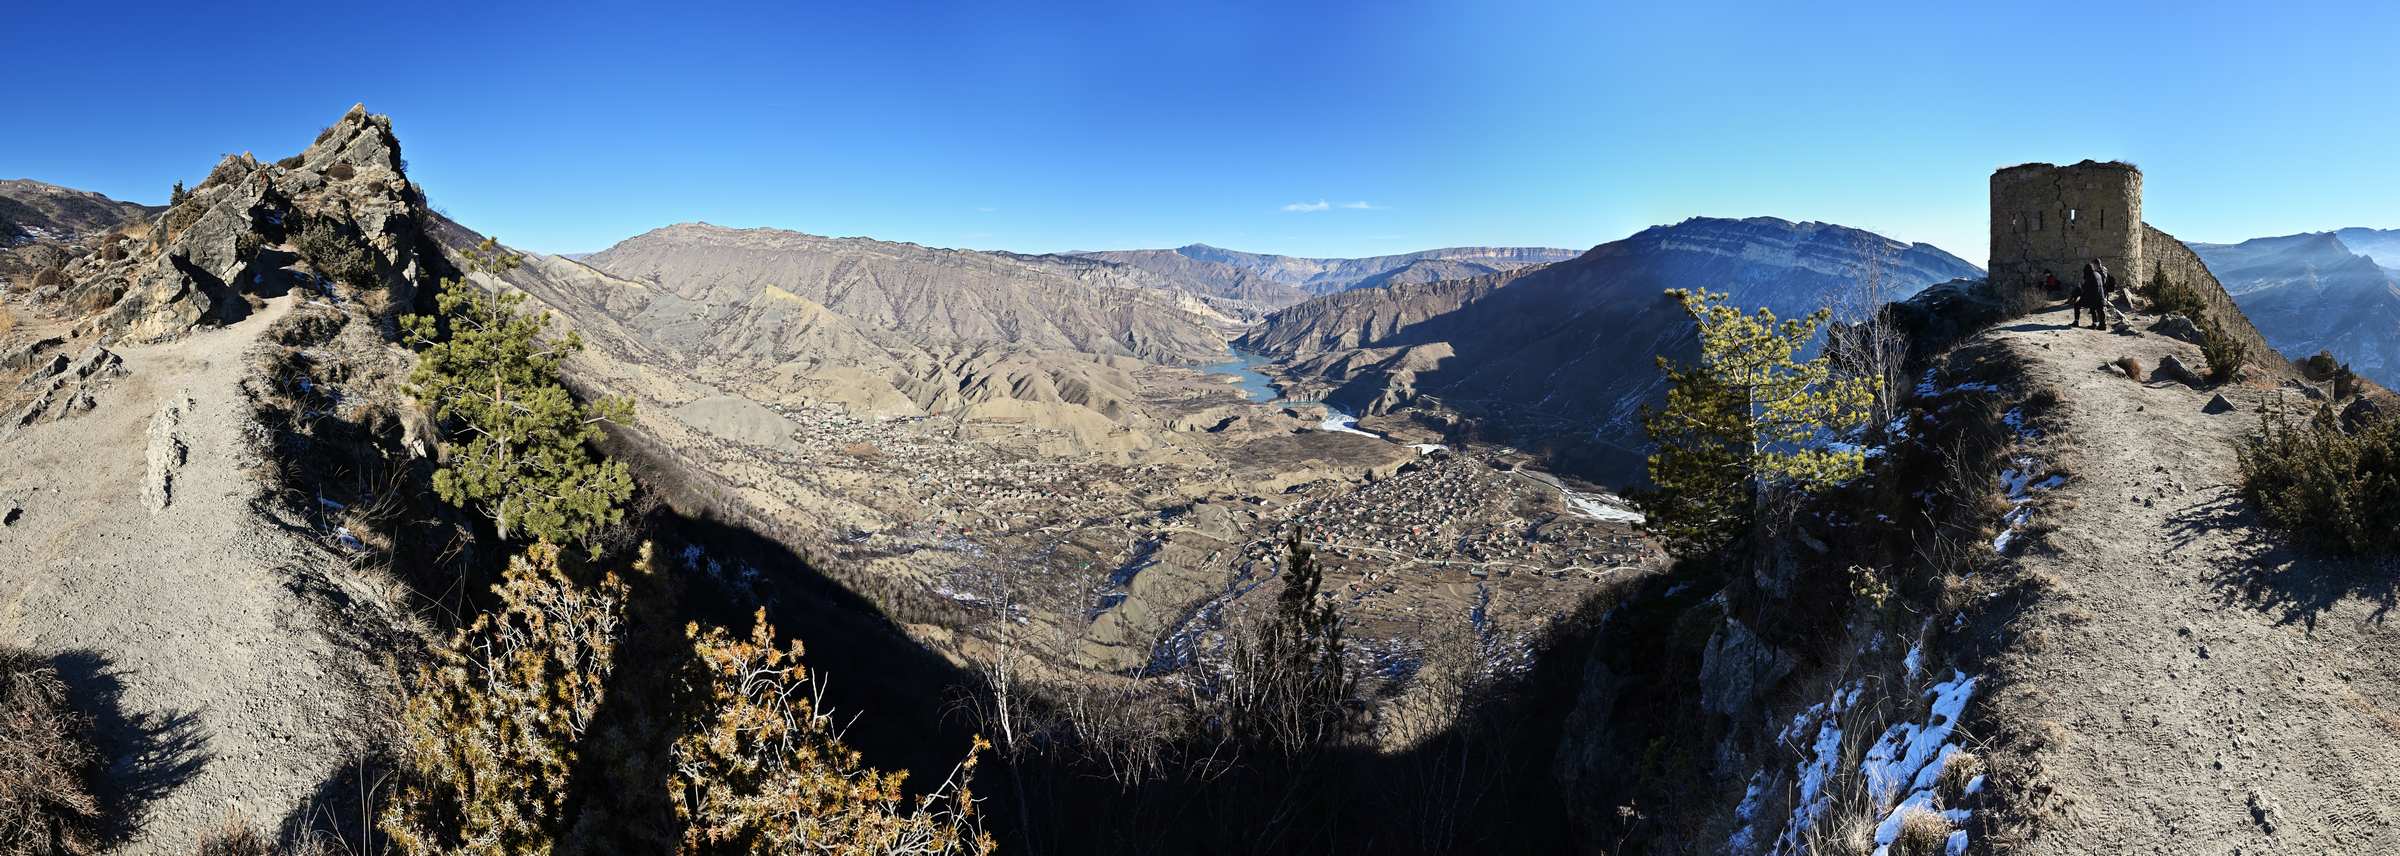 Дагестан. Панорама долины реки Кара-Койсу от Гунибской крепости.